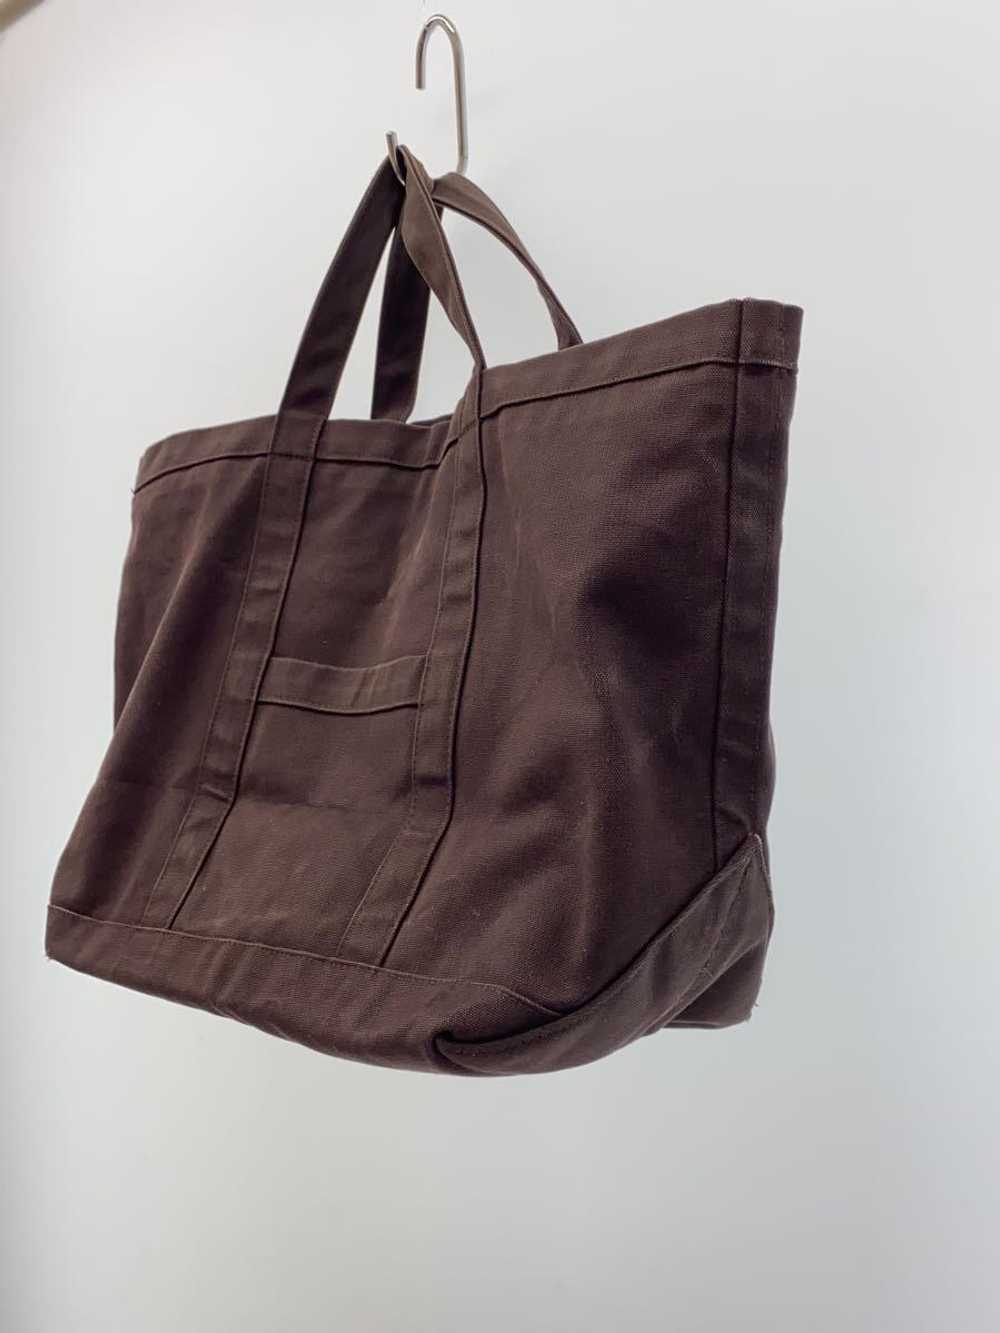 Marimekko Tote Bag/Cotton/Brw Bag - image 2